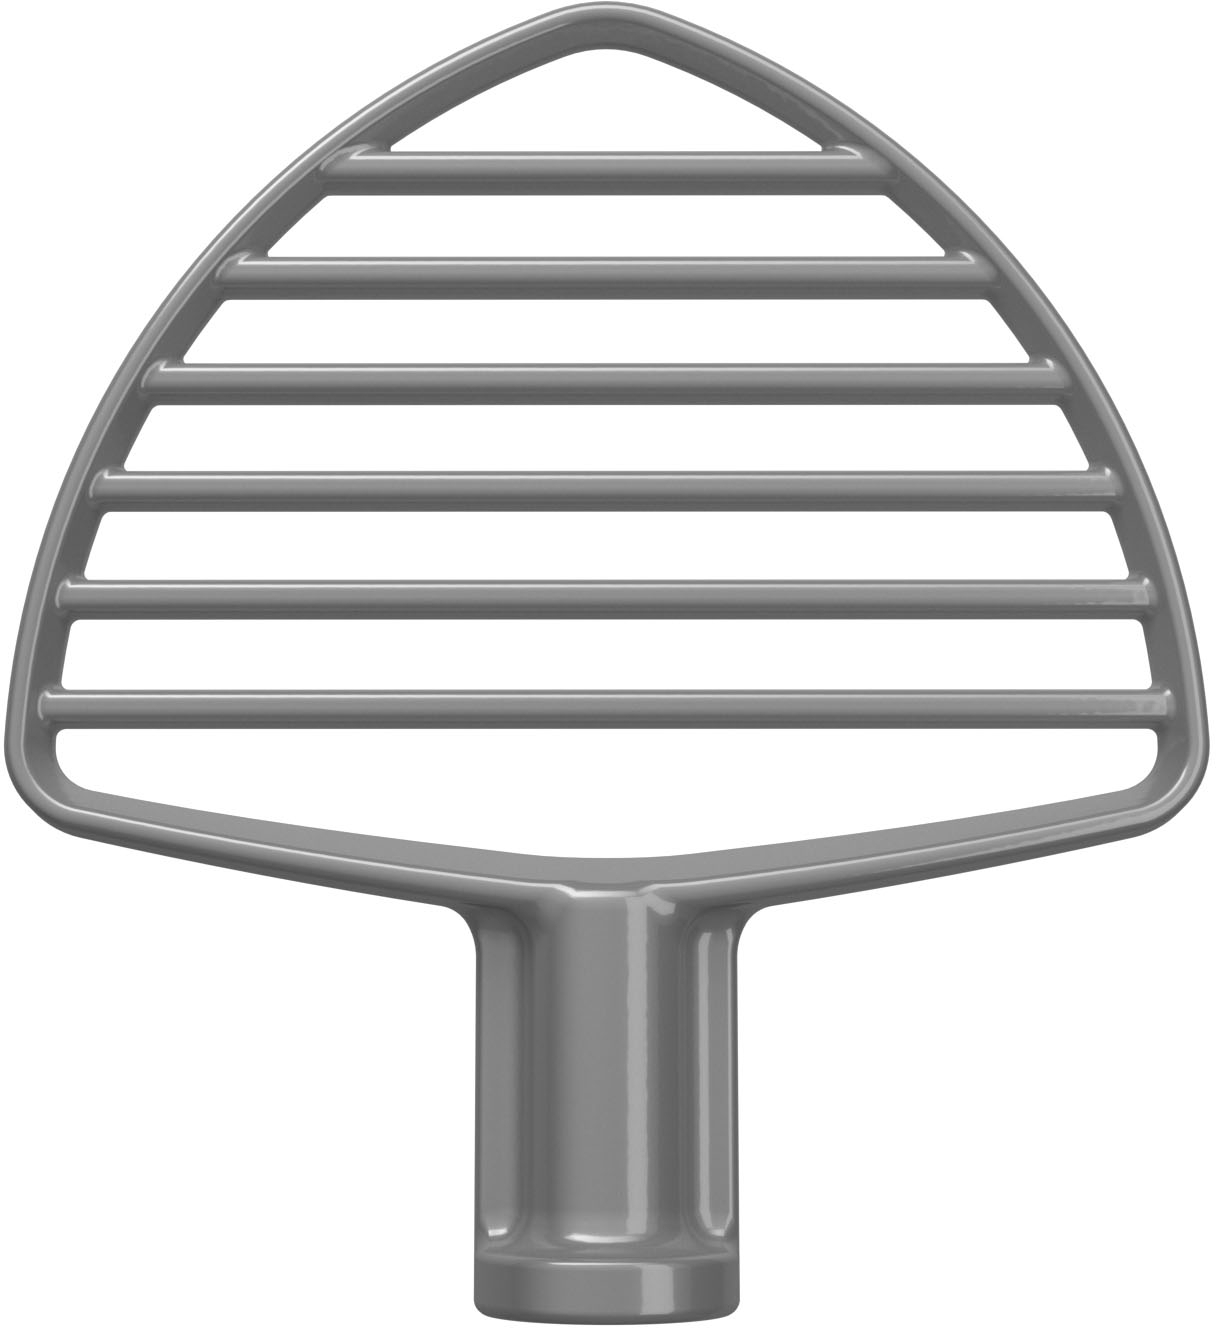 KitchenAid 5.5 Quart Bowl-Lift Stand Mixer - KSM55 - Contour Silver